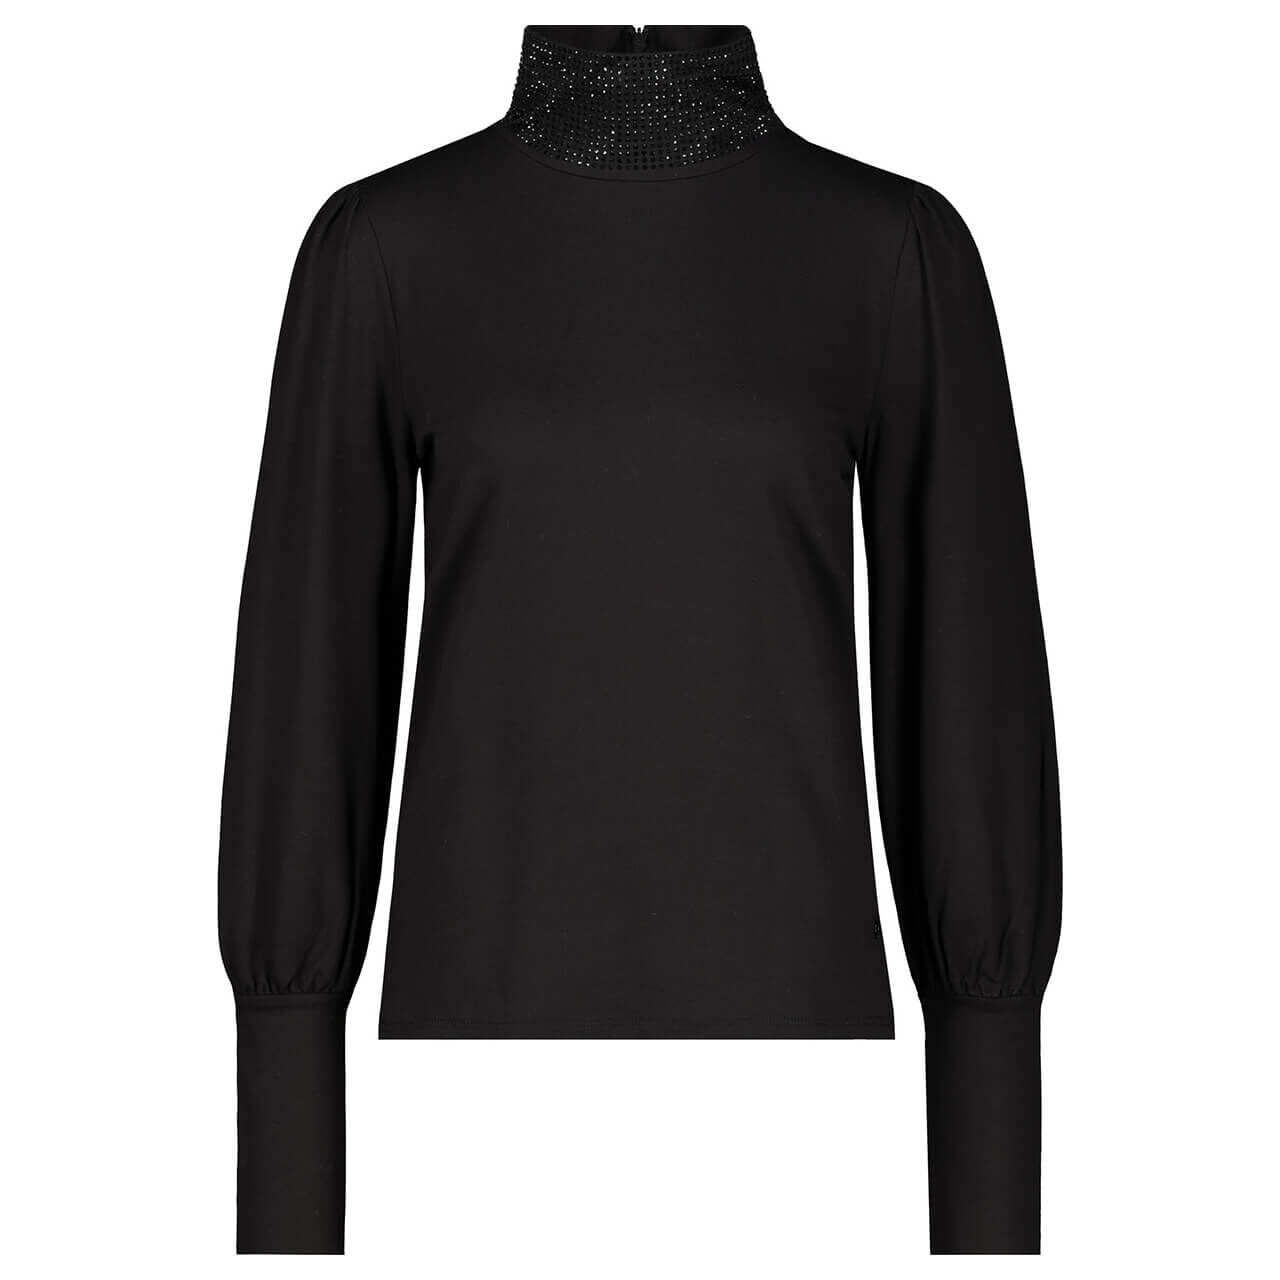 Monari Langarm Shirt in Schwarz kaufen | 807641-999